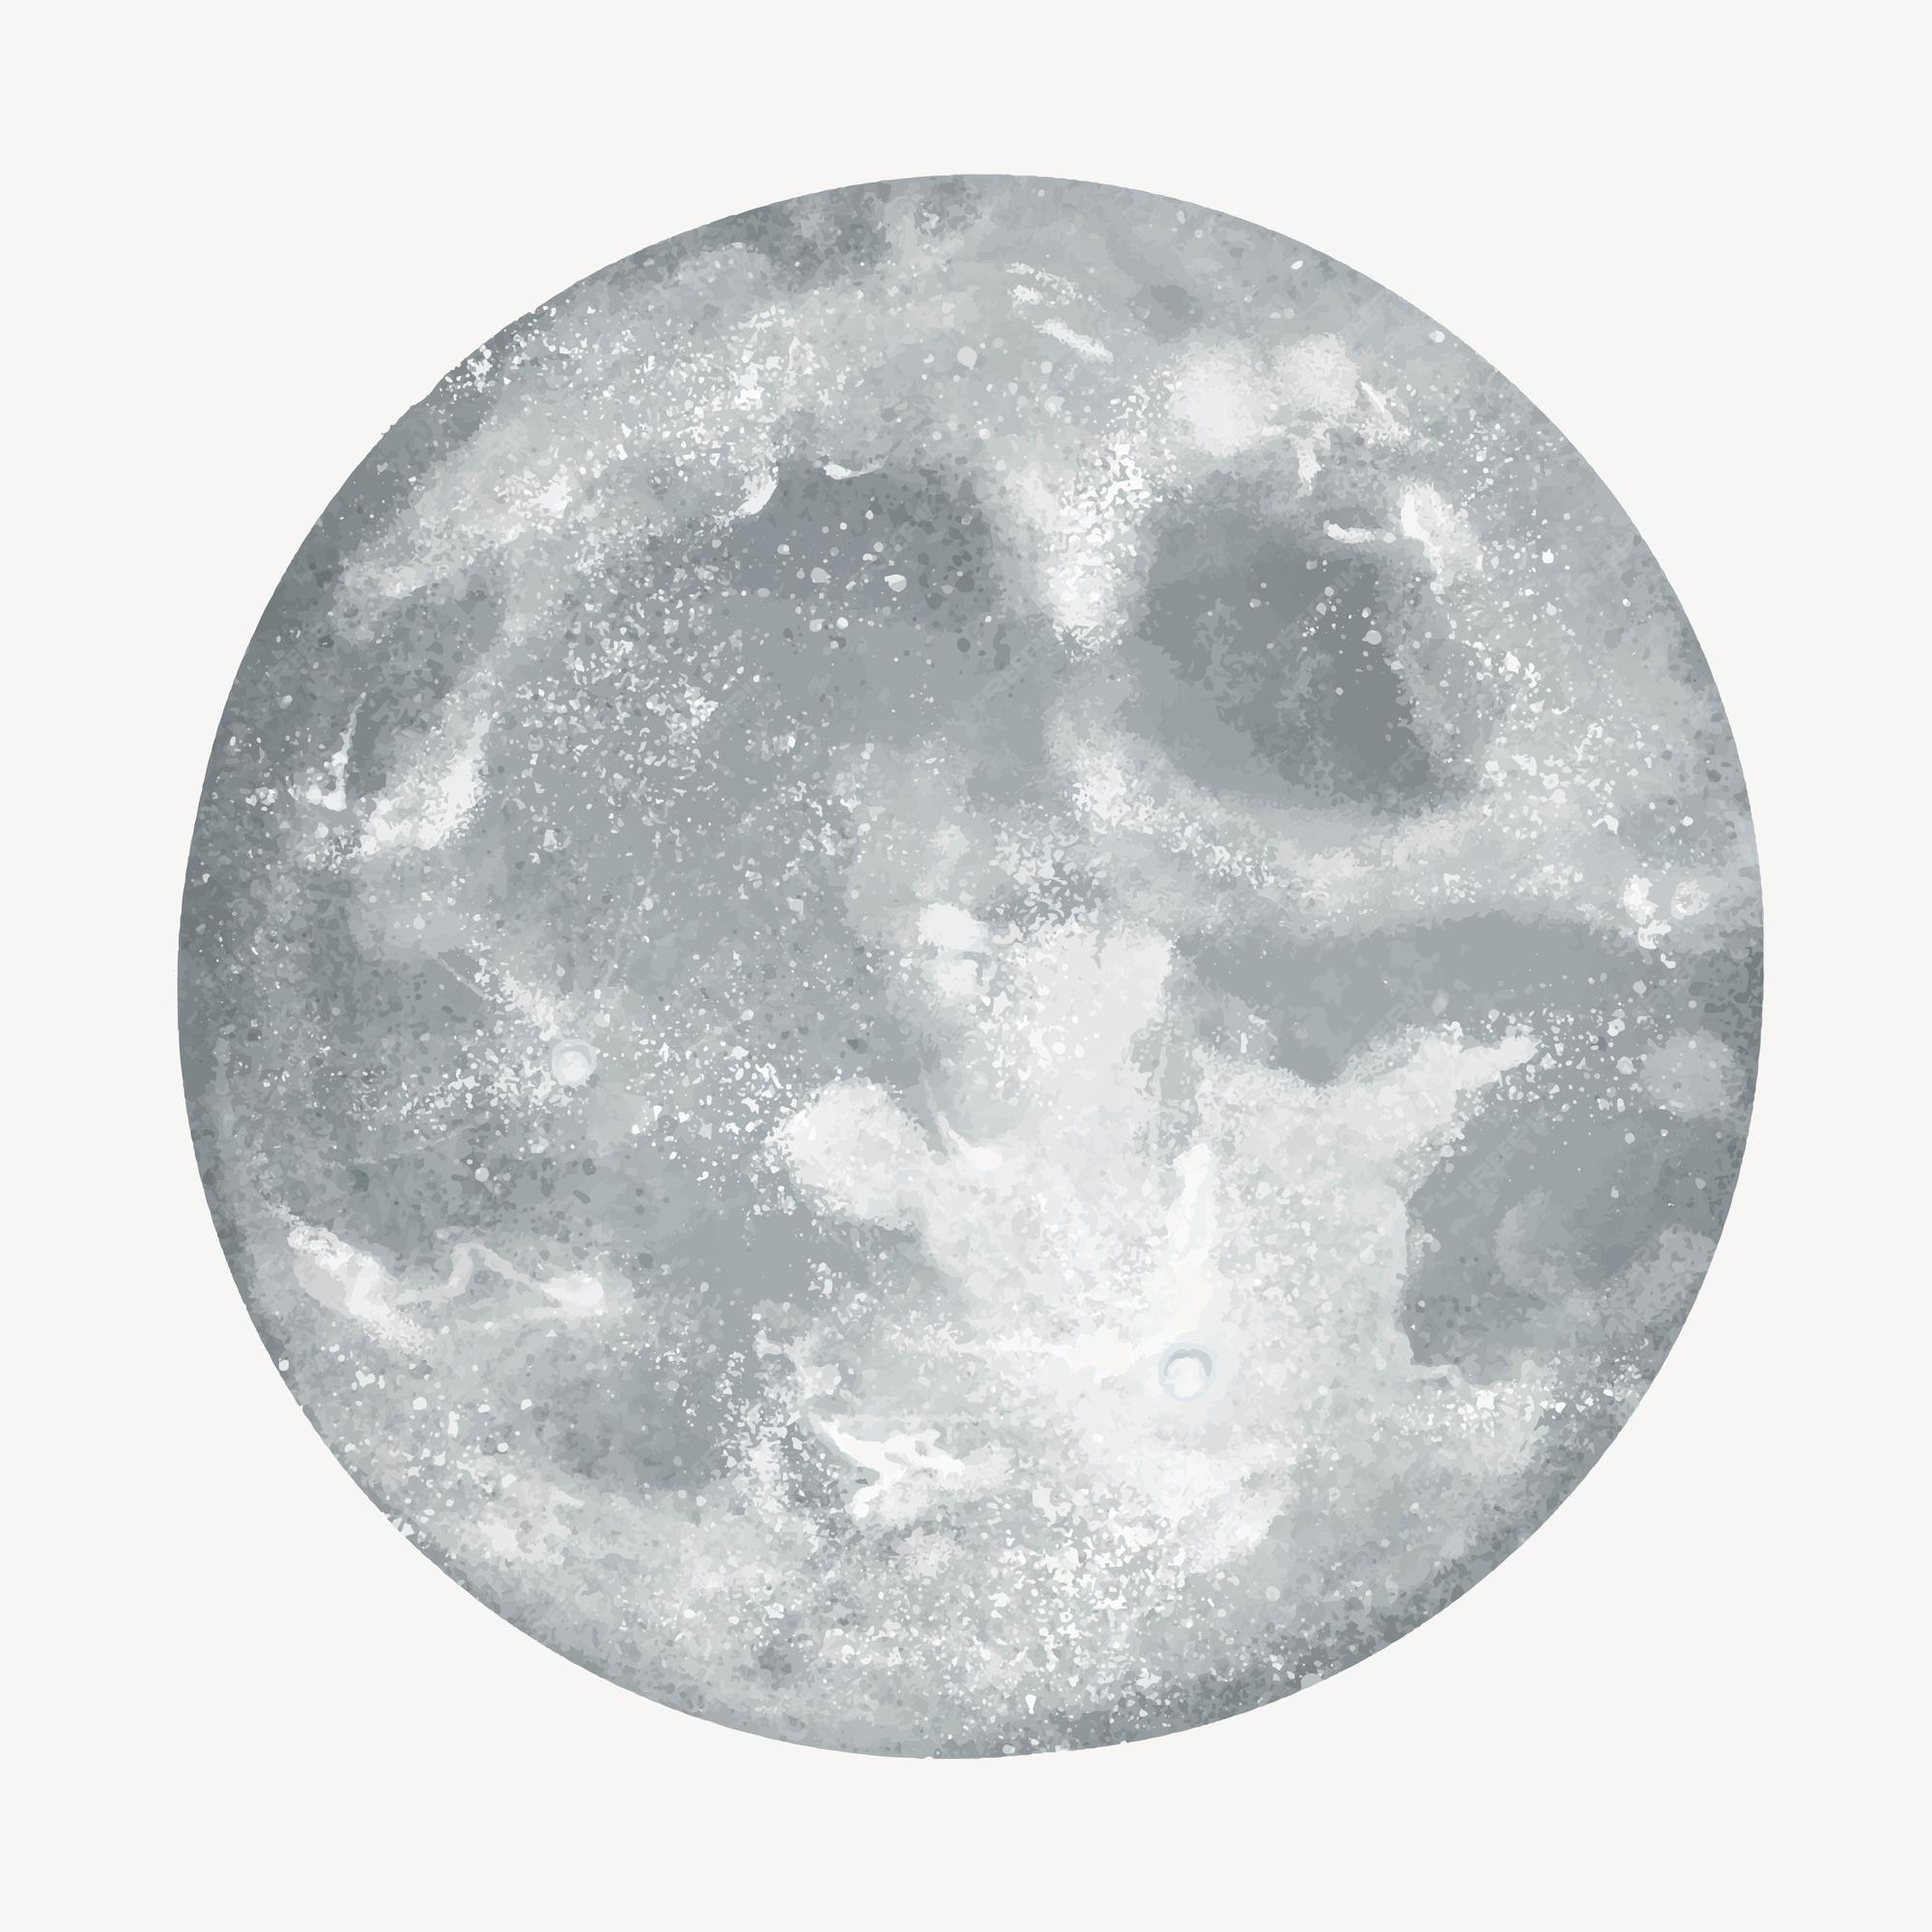 Moon Images - Free Download on Freepik